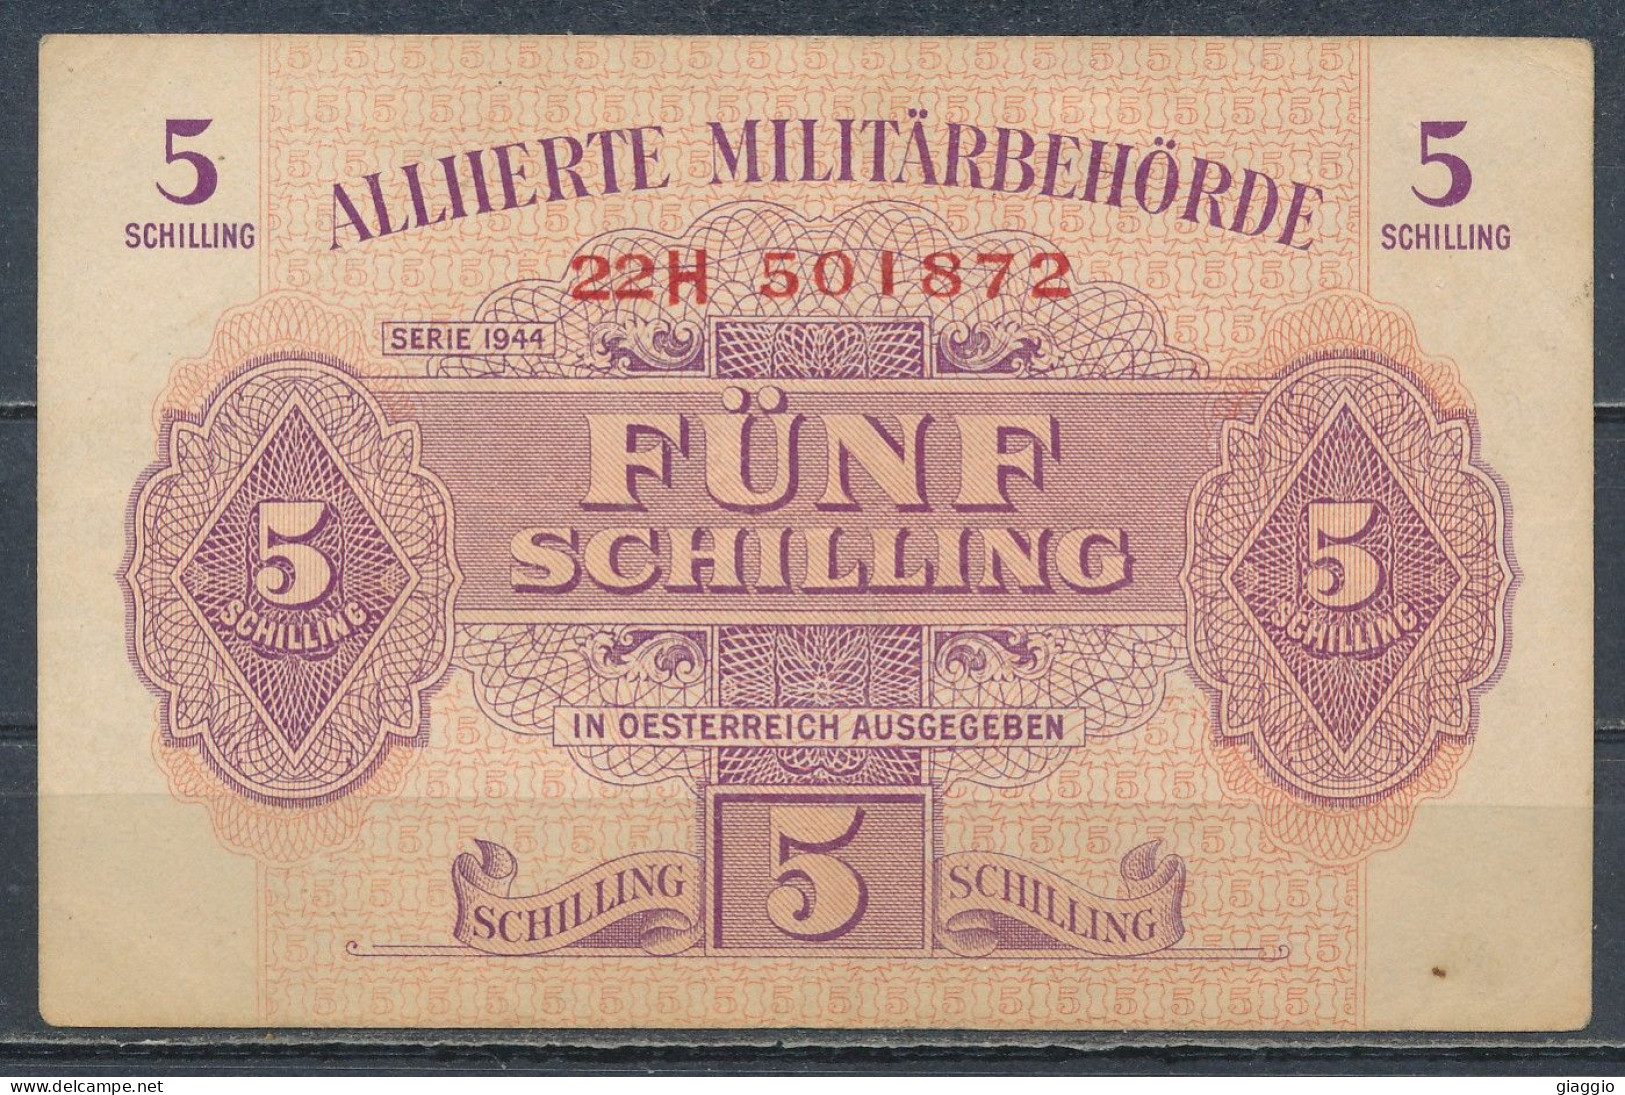 °°° AUSTRIA - 5 SCHILLING ALLIERTE MILITARBEHORDE 1944 °°° - Autriche